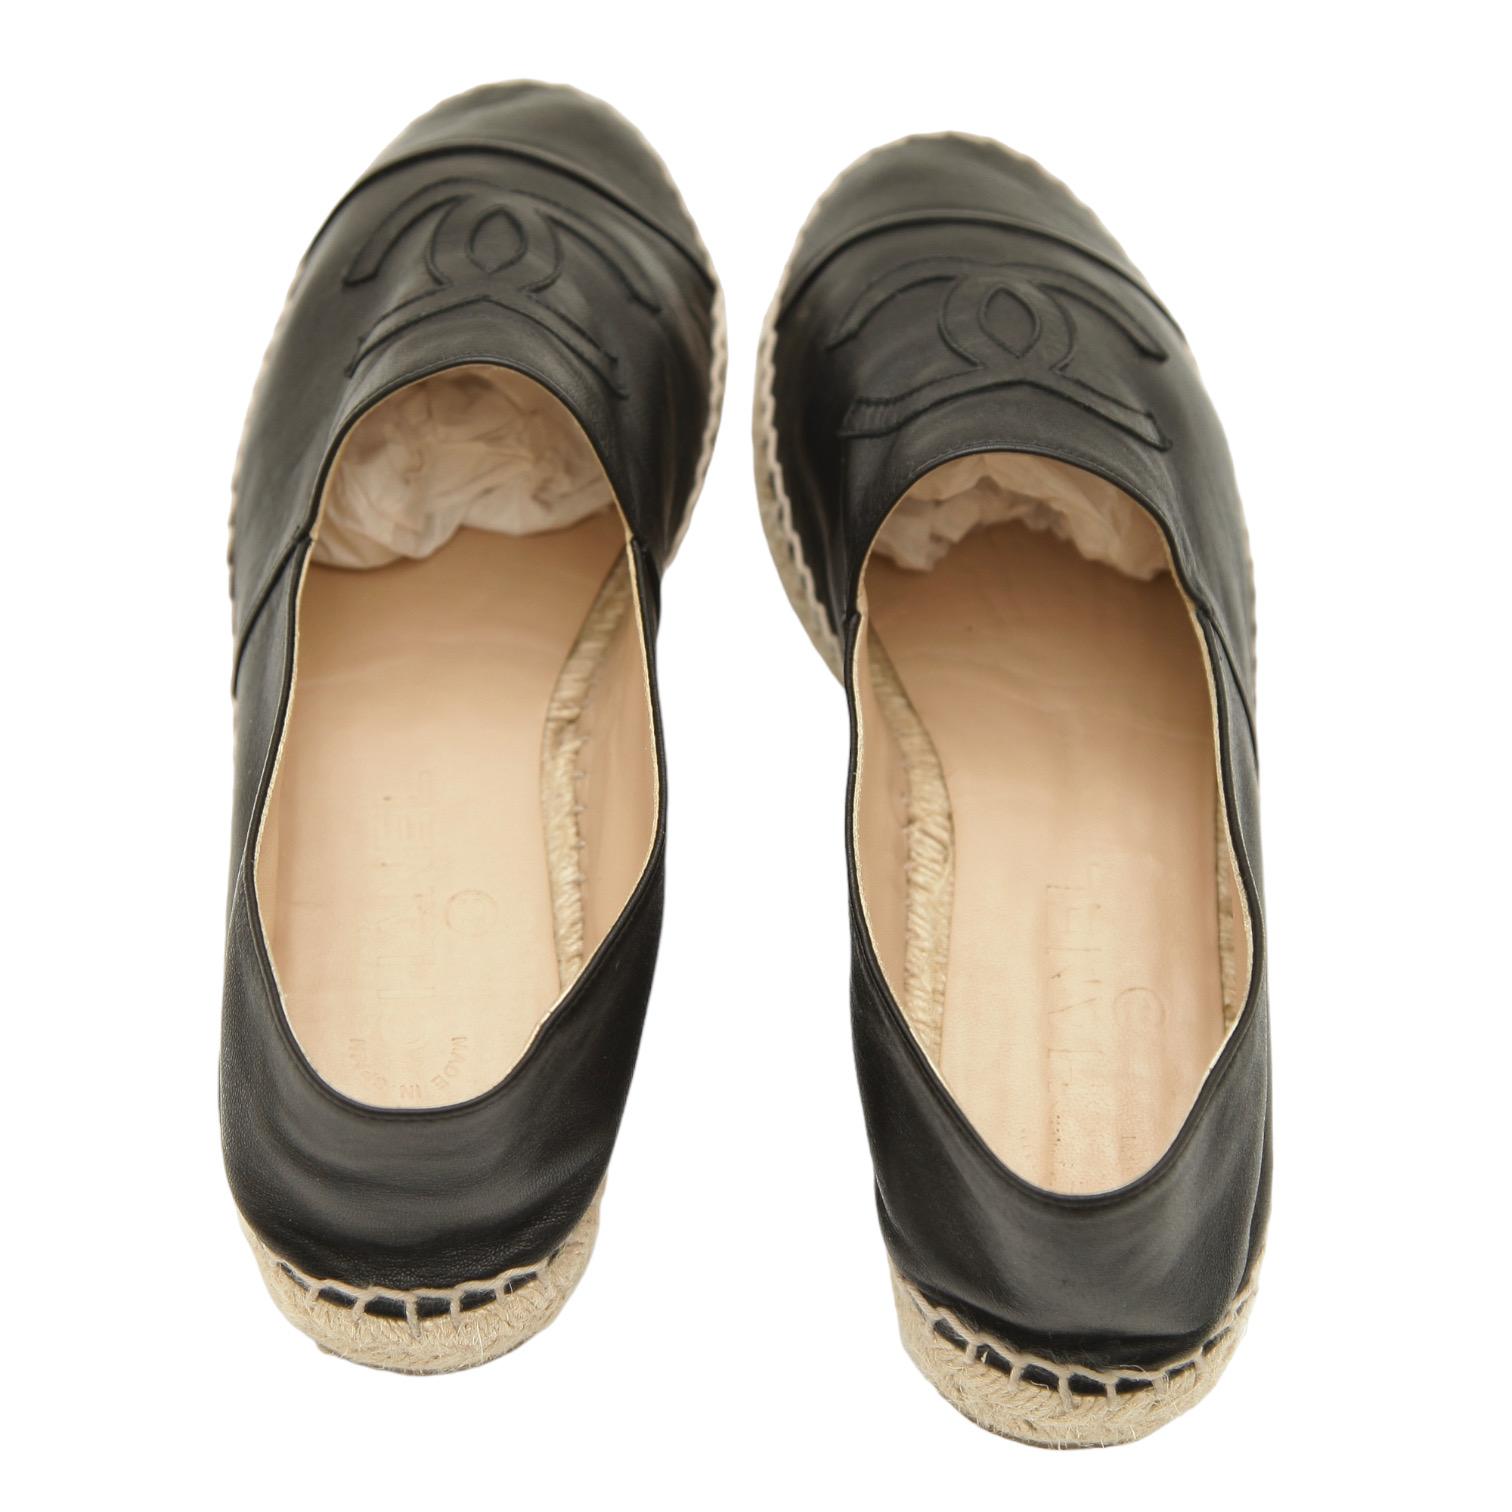 CHANEL Black Lambskin Leather Espadrilles Loafers Flats Cap Toe CC Shoes Sz 40 6